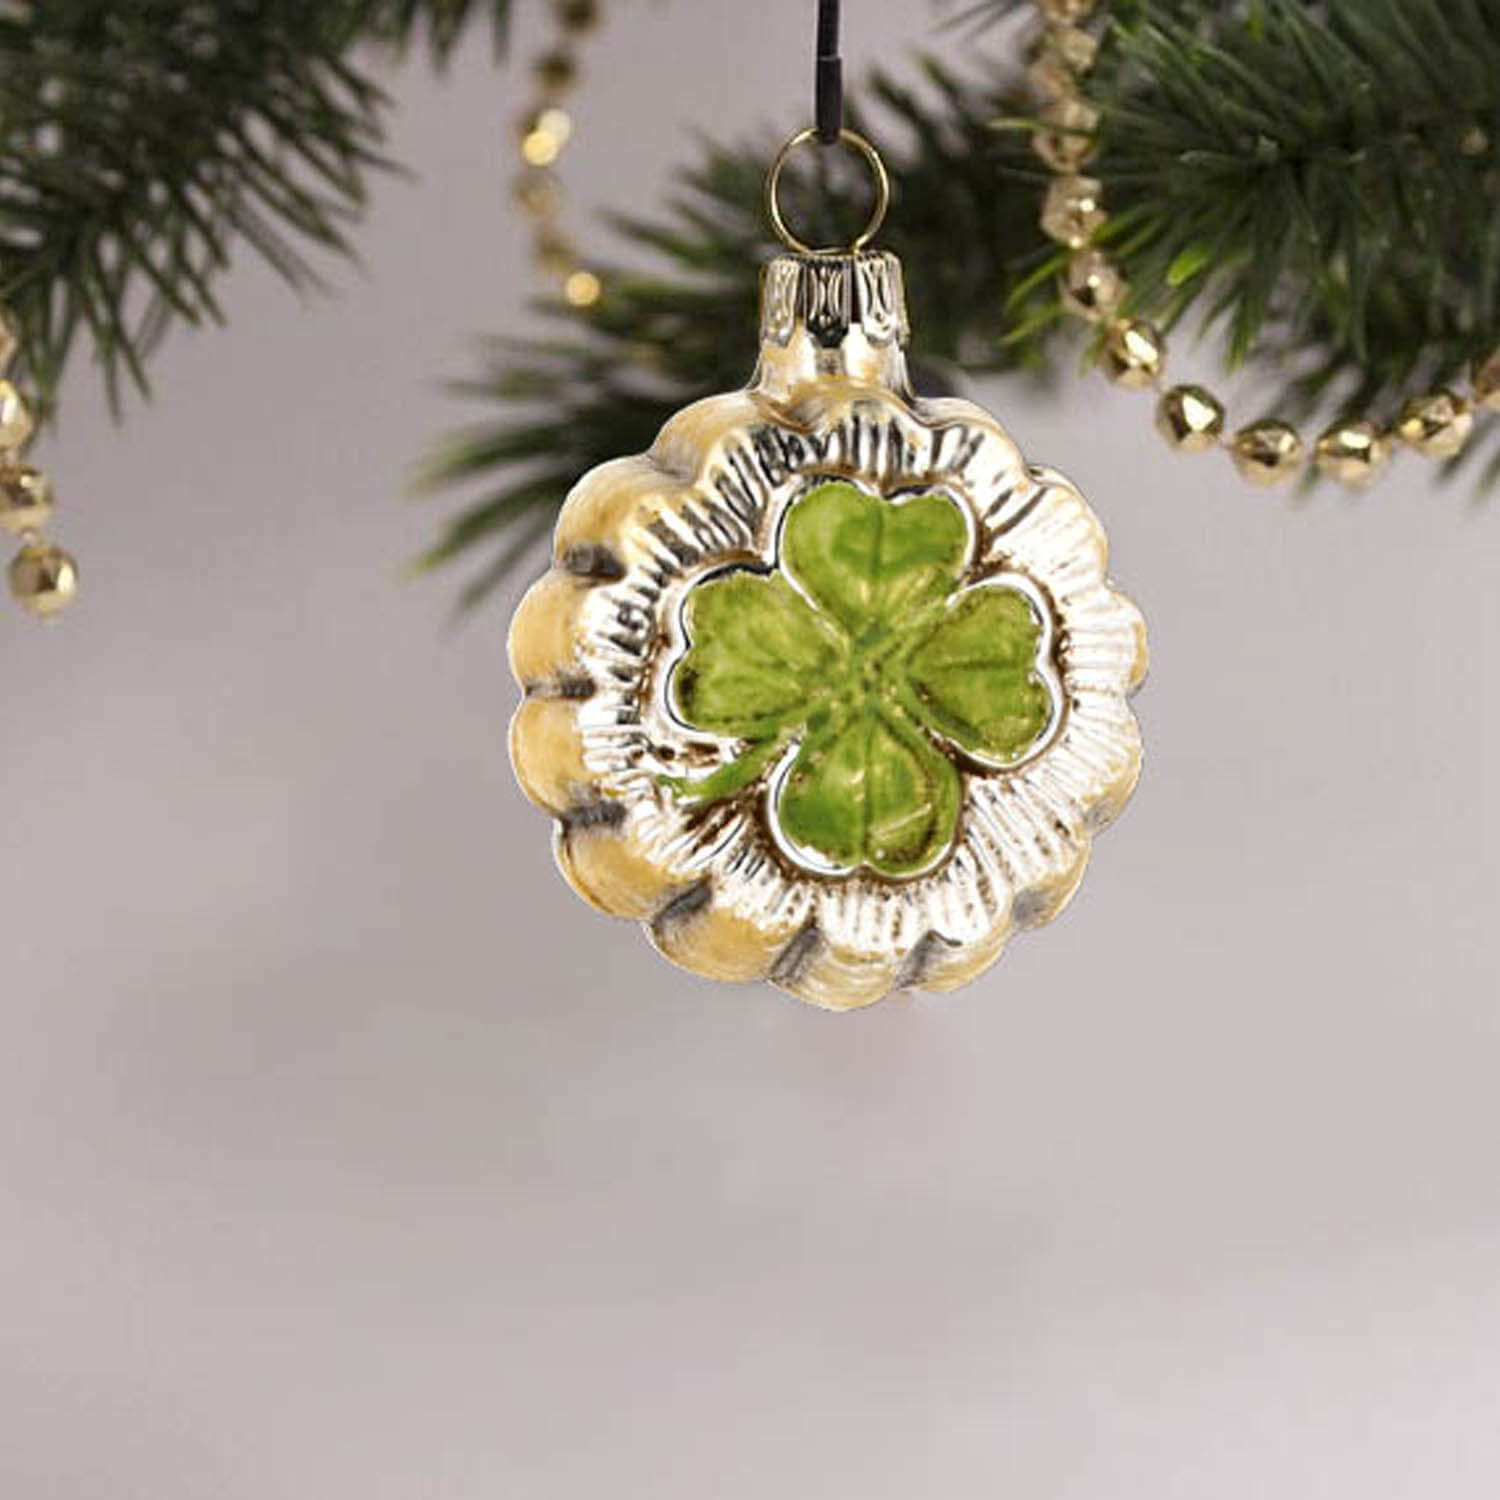 MAROLIN® - Miniature glass ornament "cloverleaf"